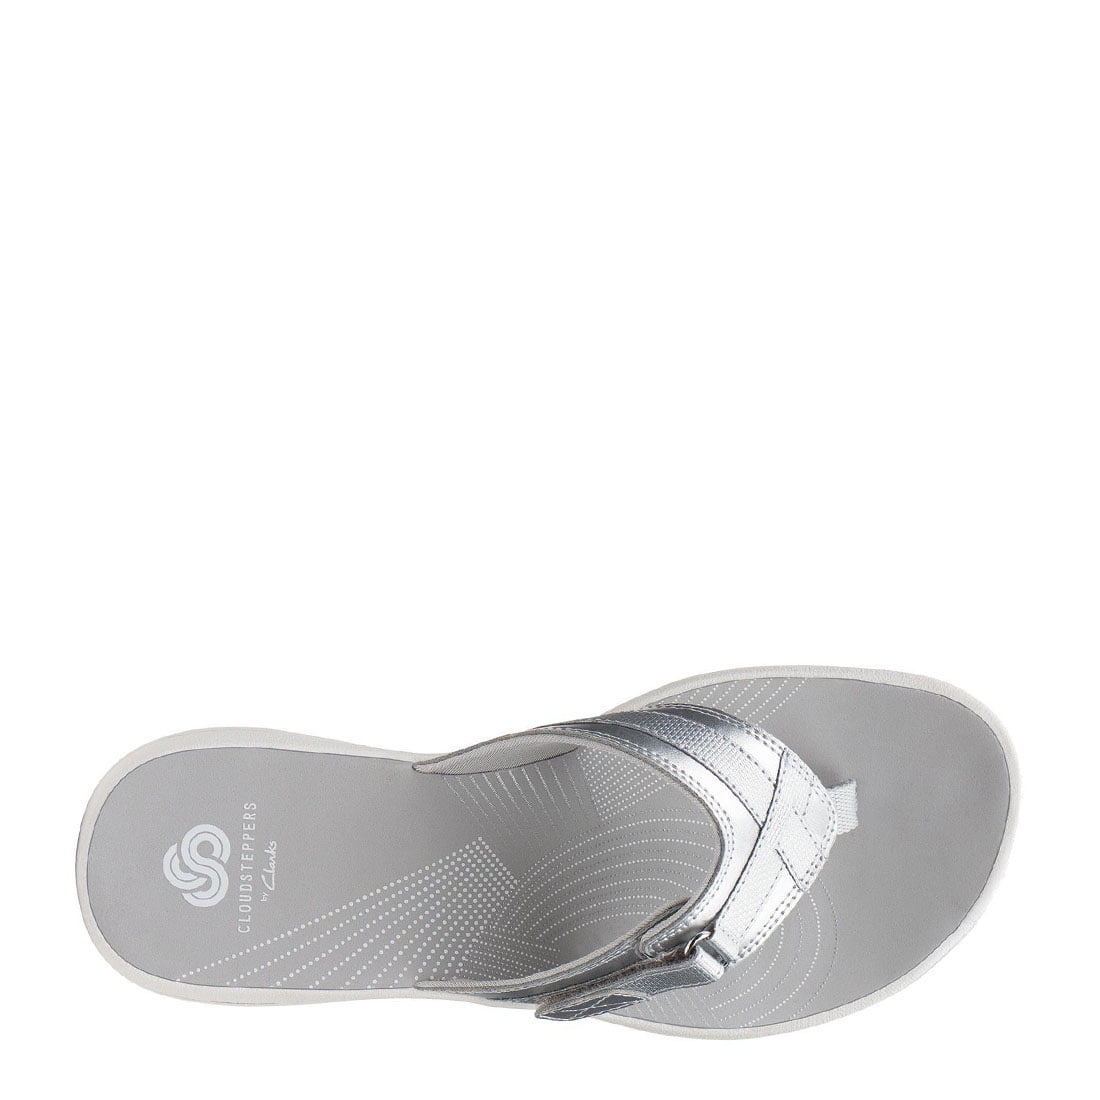 Breeze Sea Flip Flop Sandals shoe size 6 Casual 26126503 Silver - Walmart.com